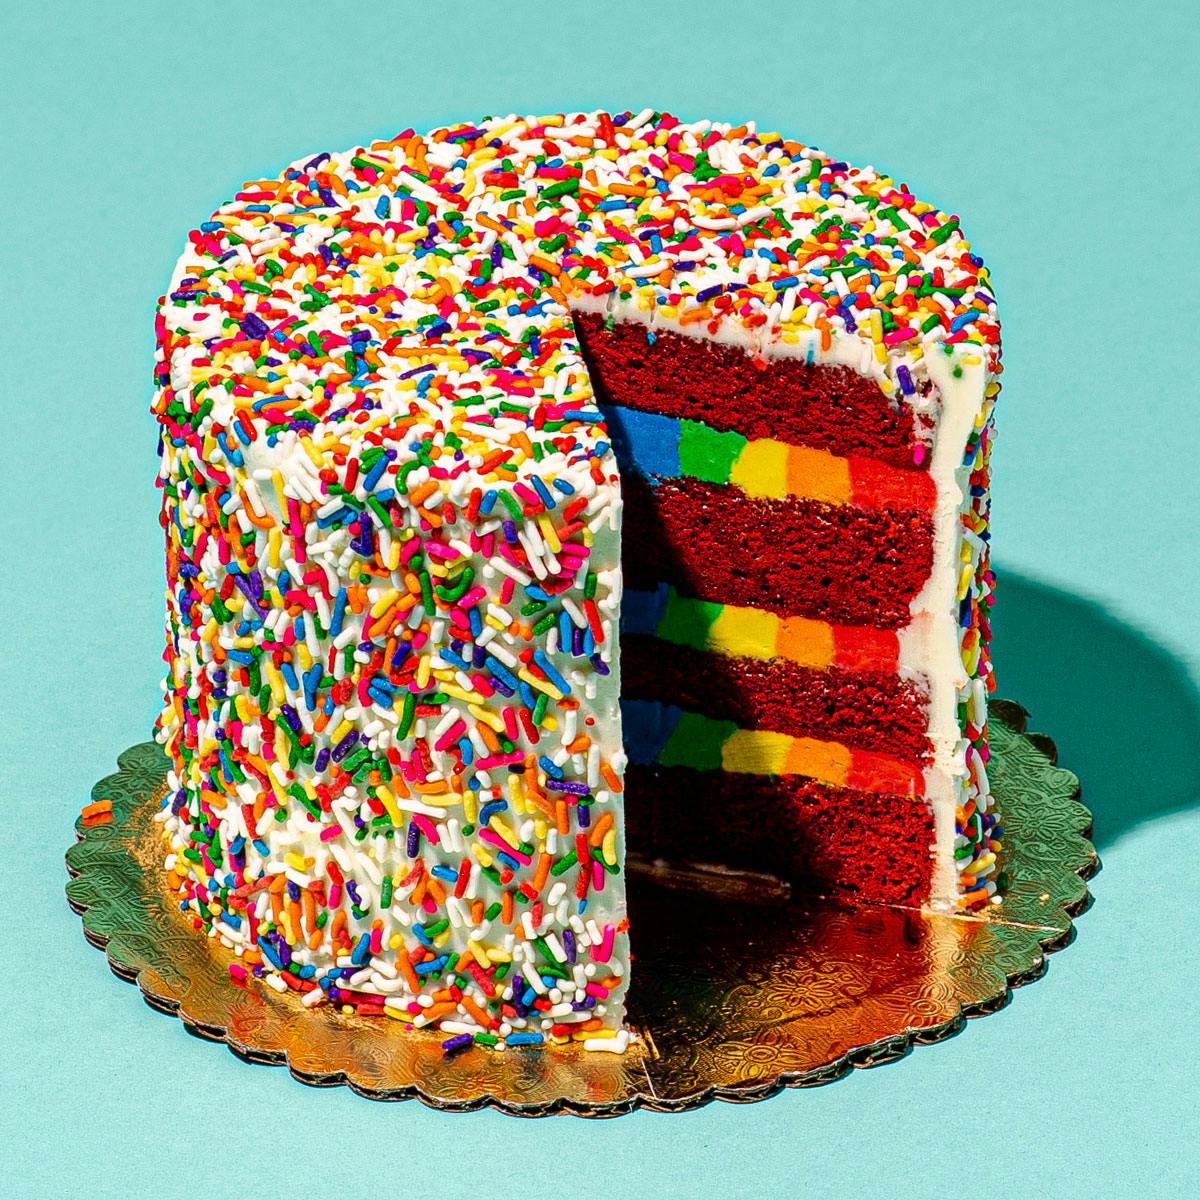 Red Velvet 4-Layer Rainbow Cake